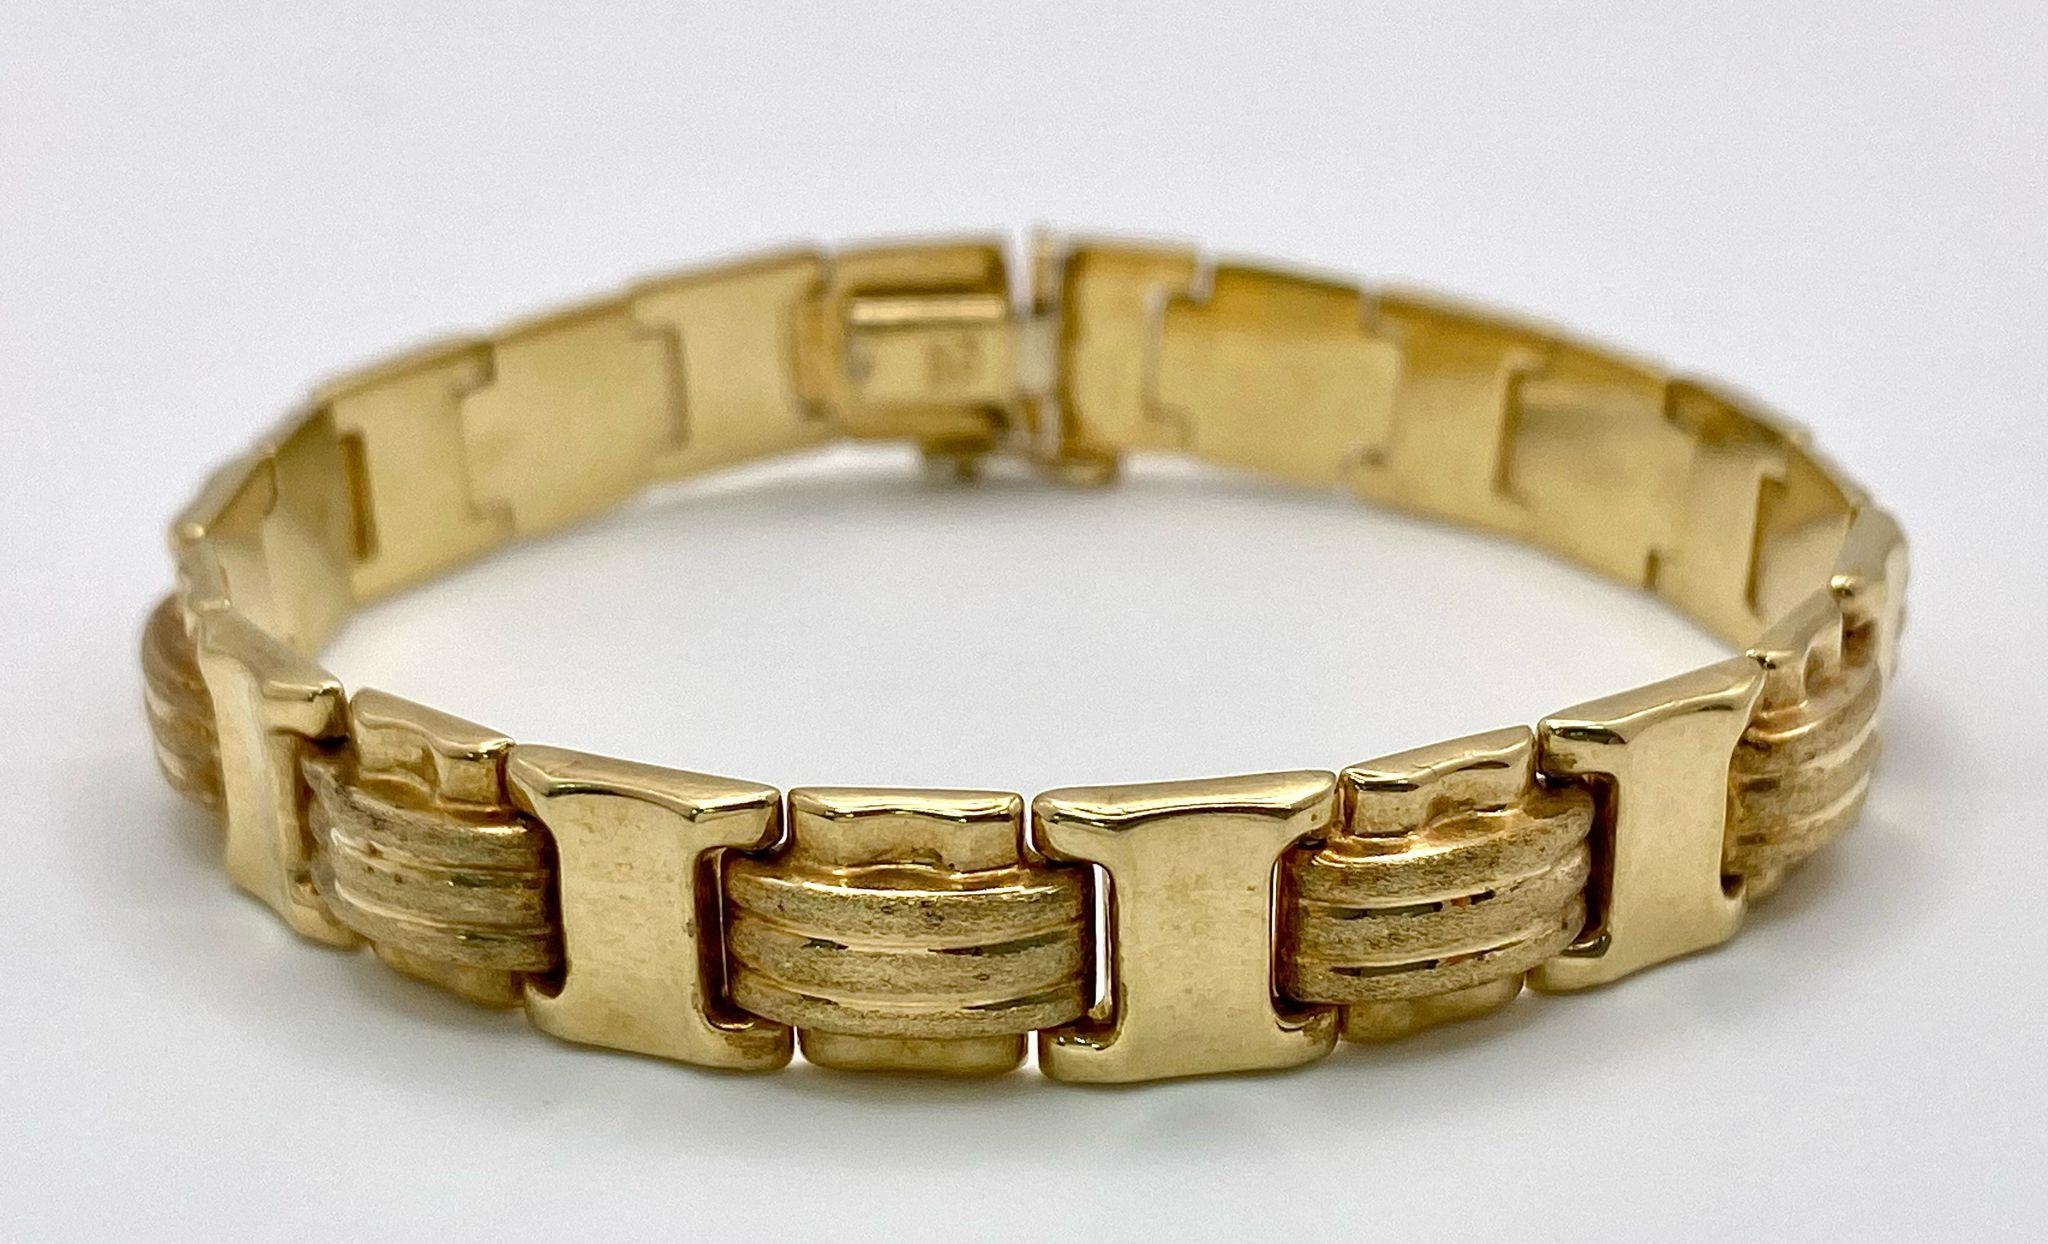 A Stylish 14K Yellow Gold Belt Buckle Link Bracelet. 18cm. 13.9g weight.